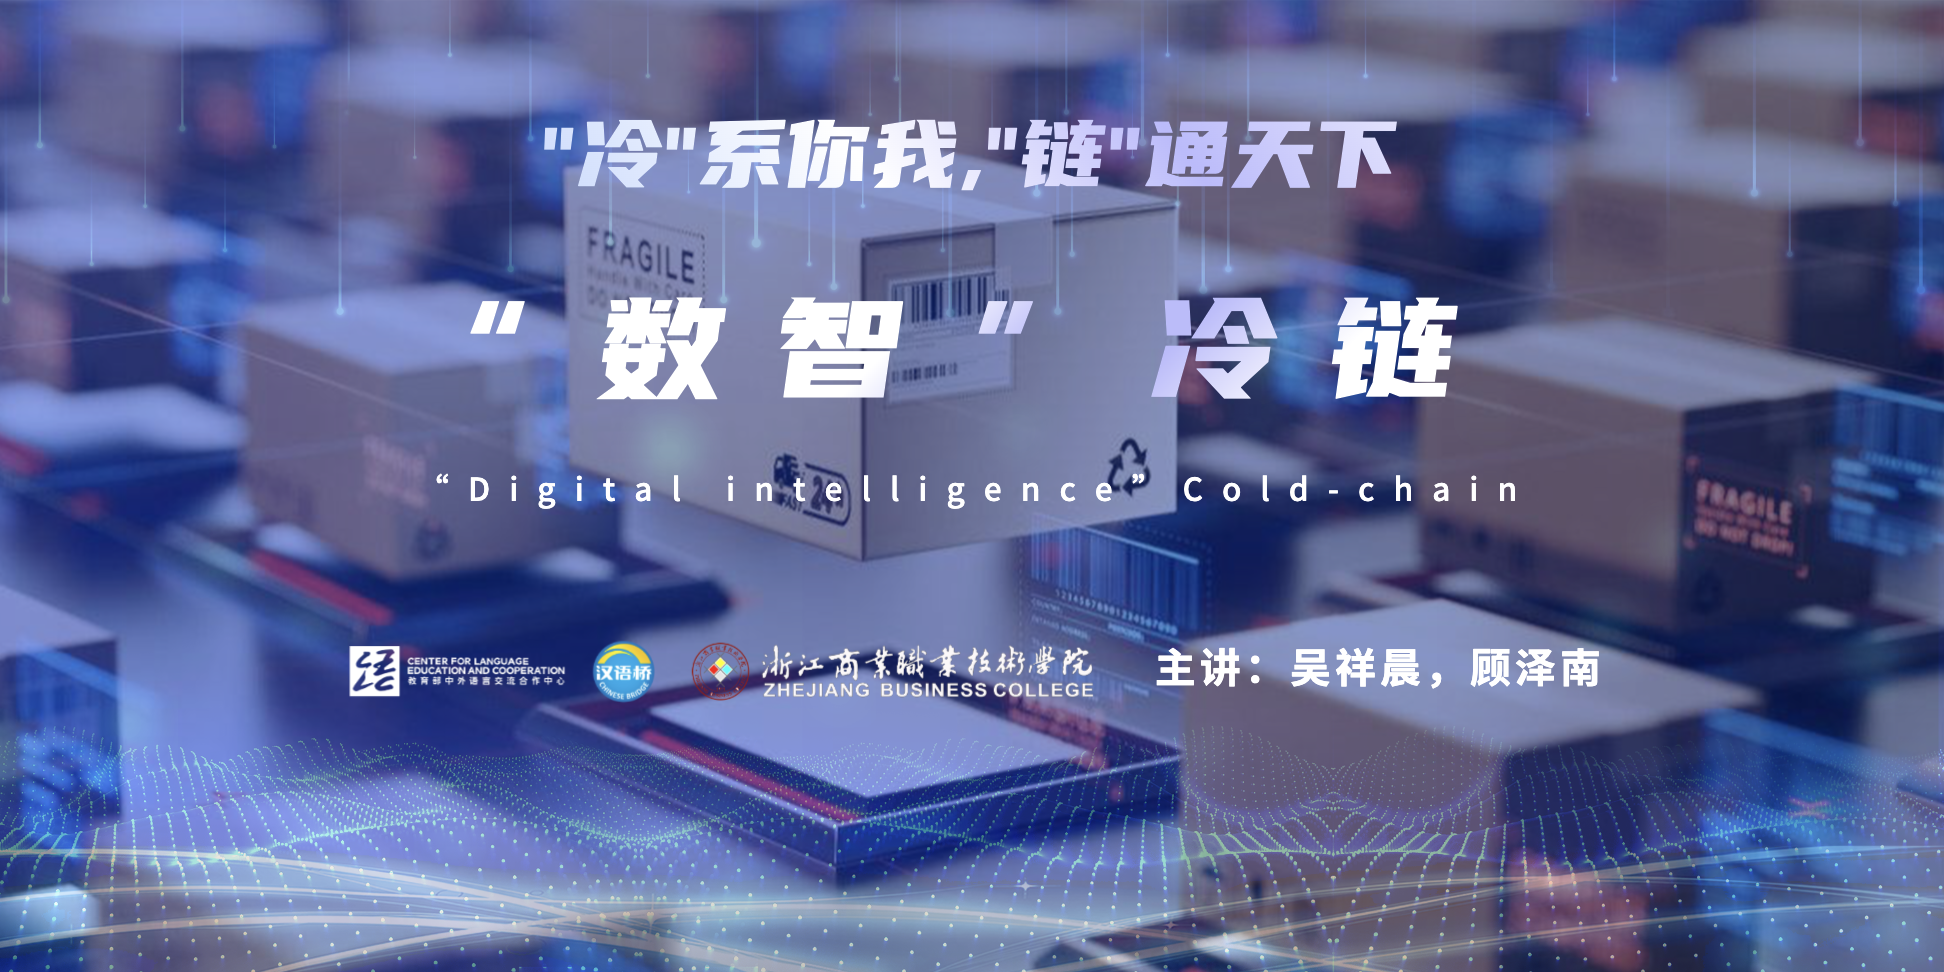 Digital intelligence”Cold-chain